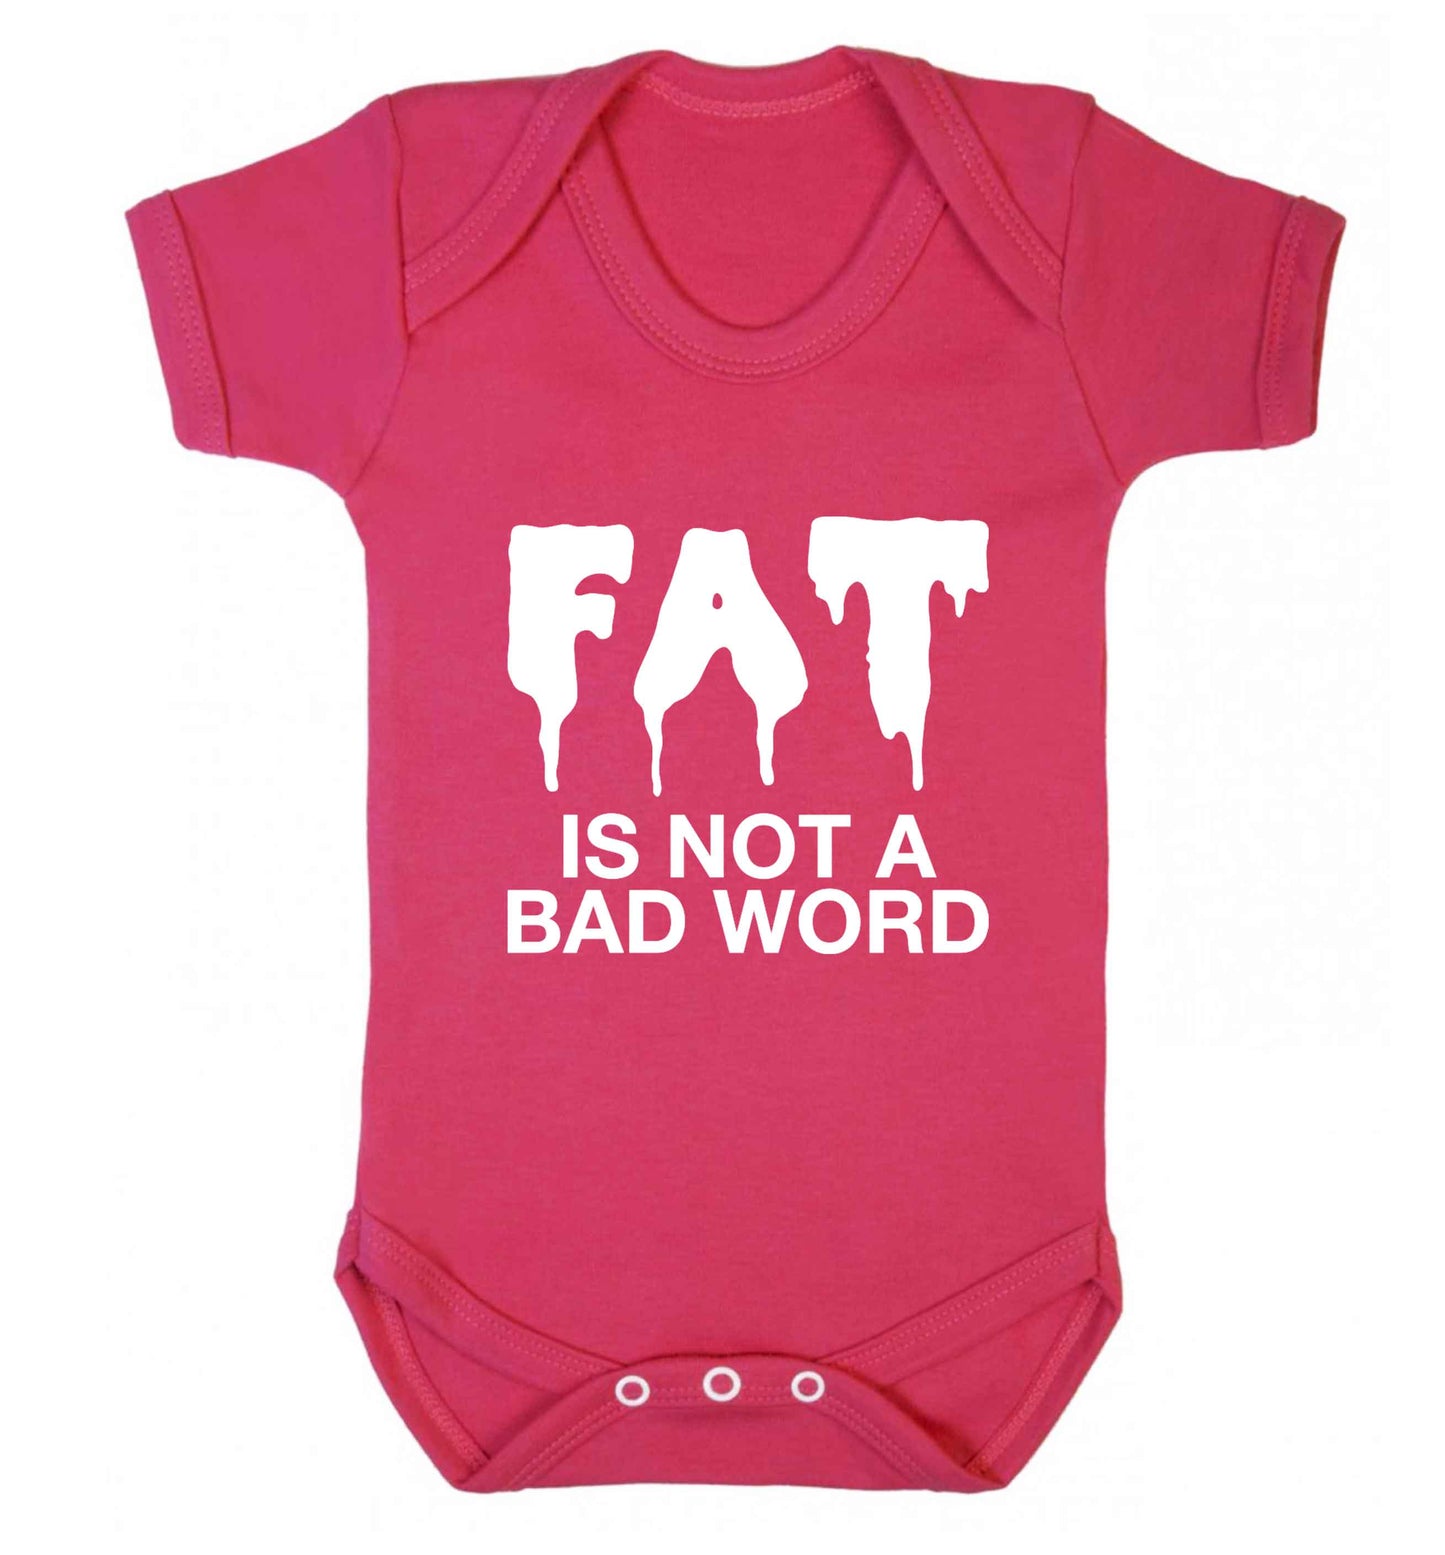 Fat is not a bad word baby vest dark pink 18-24 months